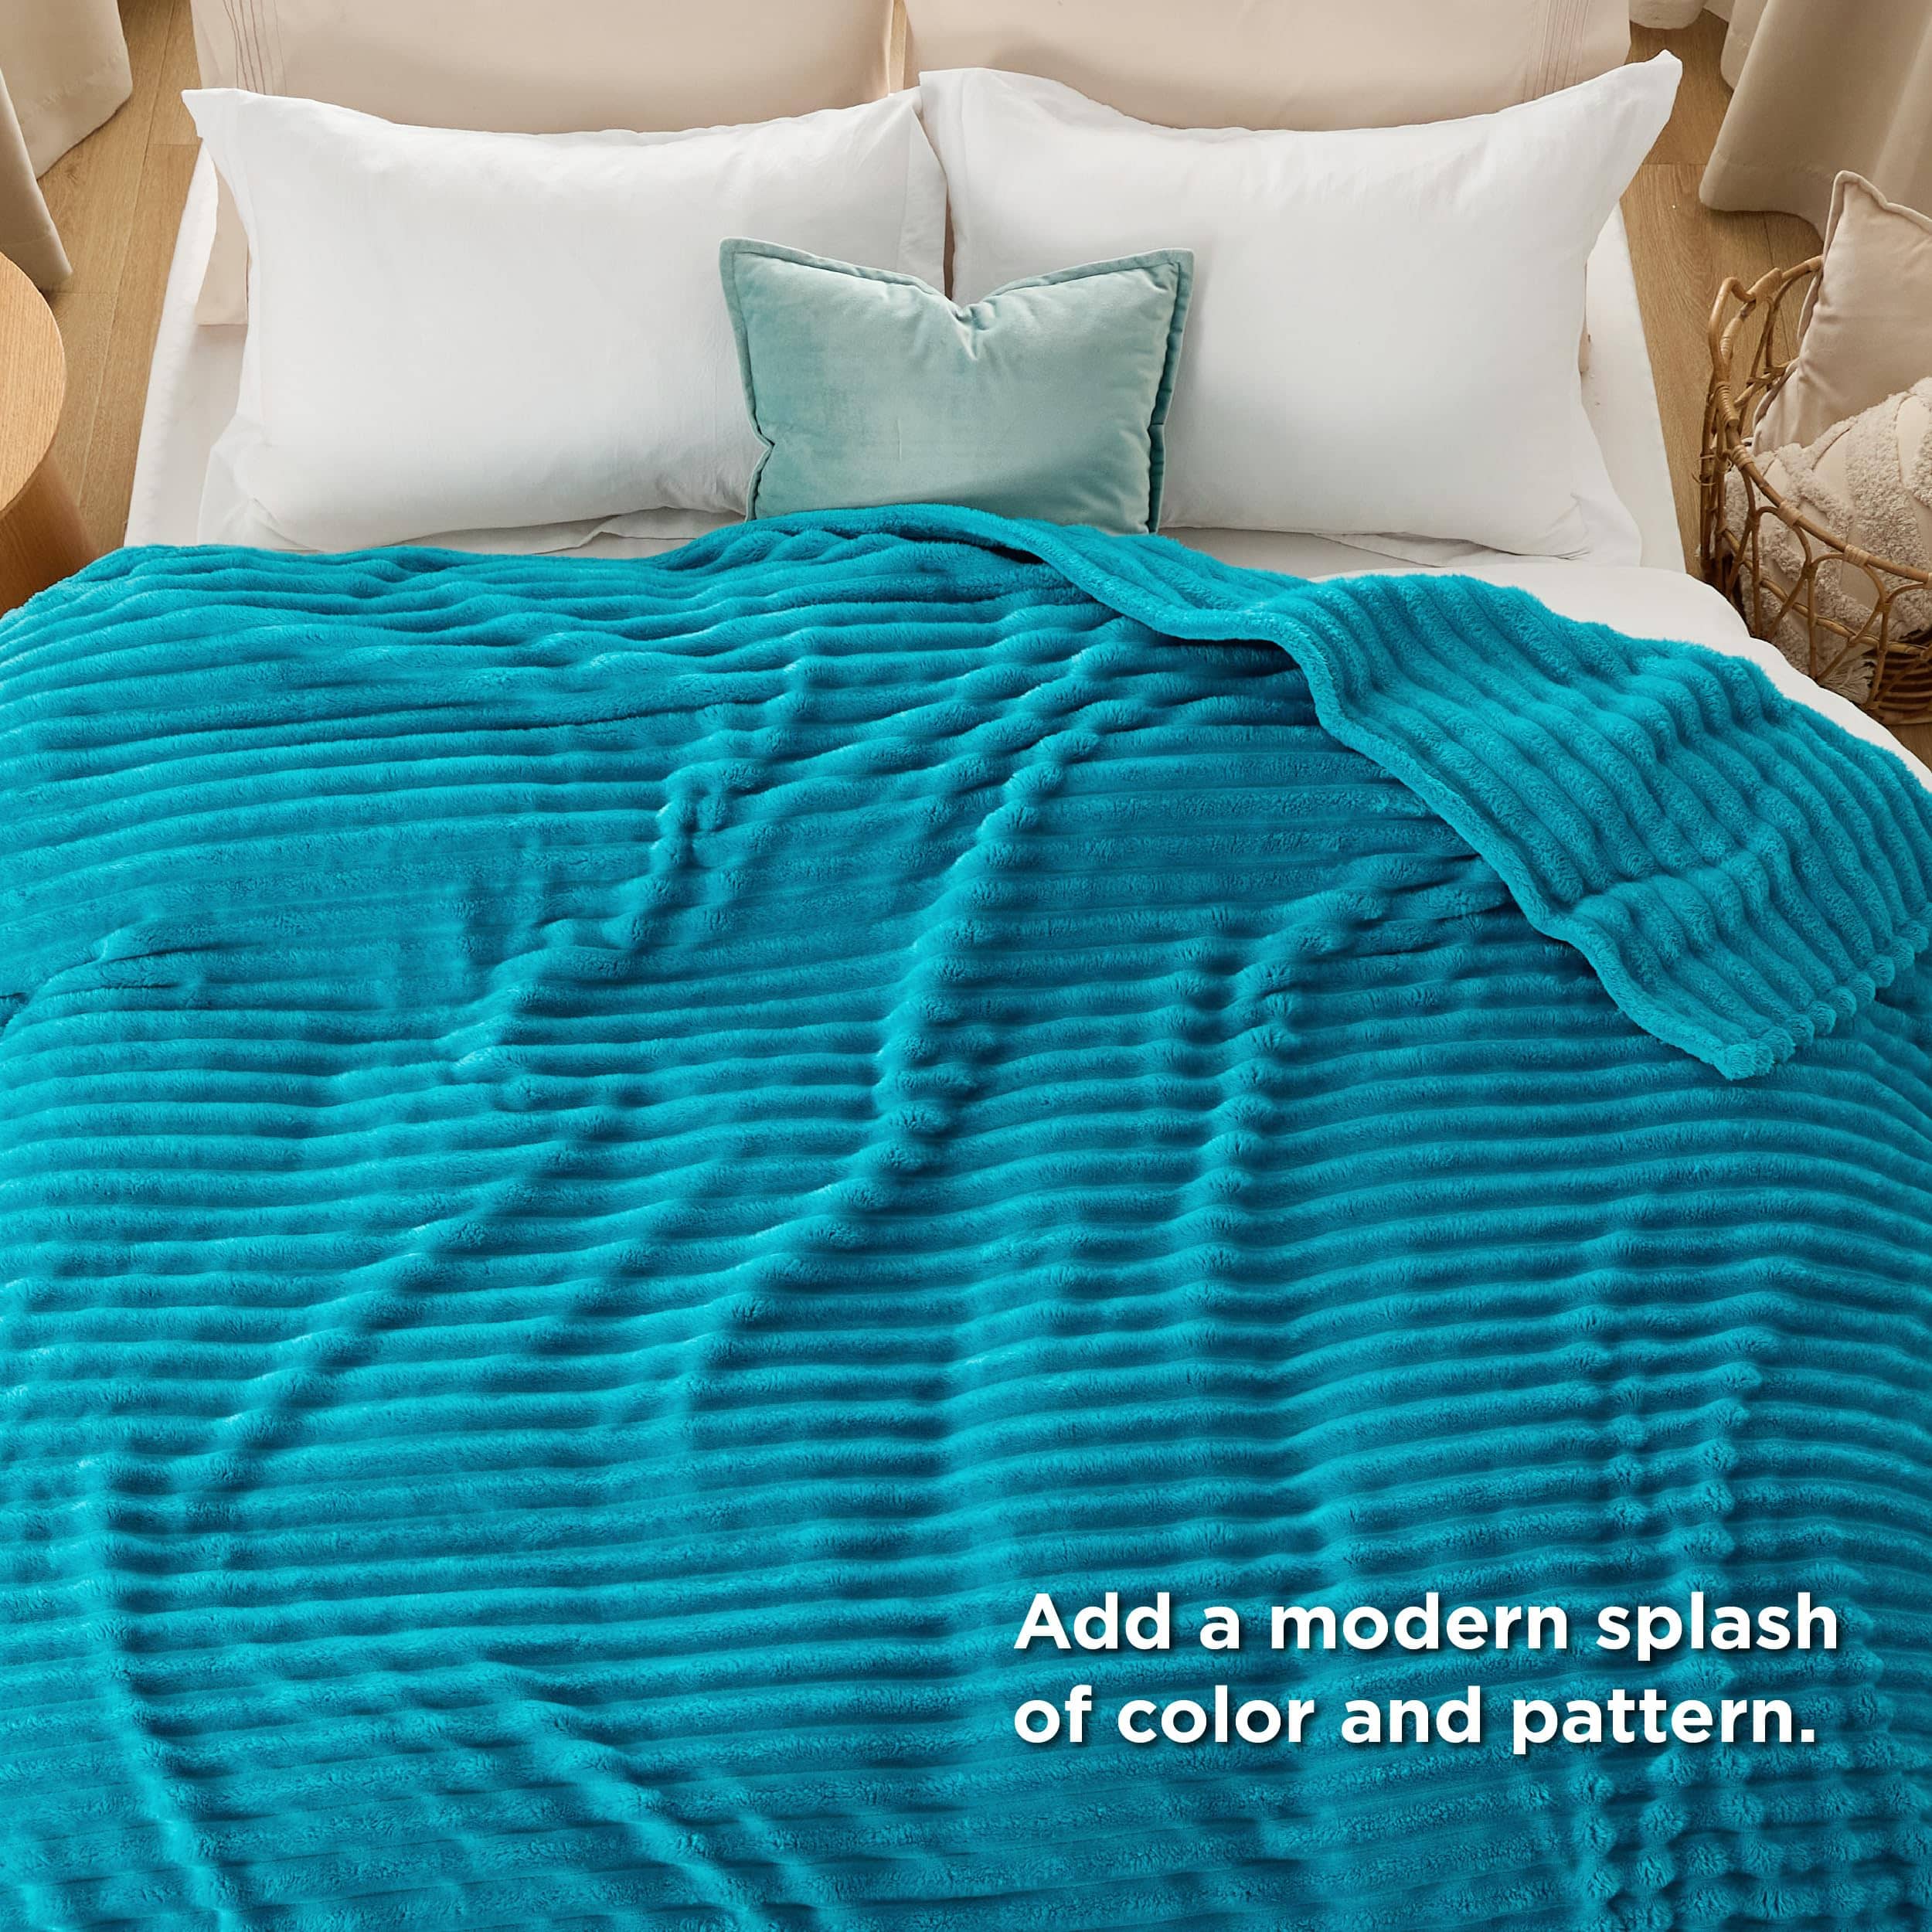 TIKTOK-VIRAL Bedsure Striped Flannel Fleece Blanket